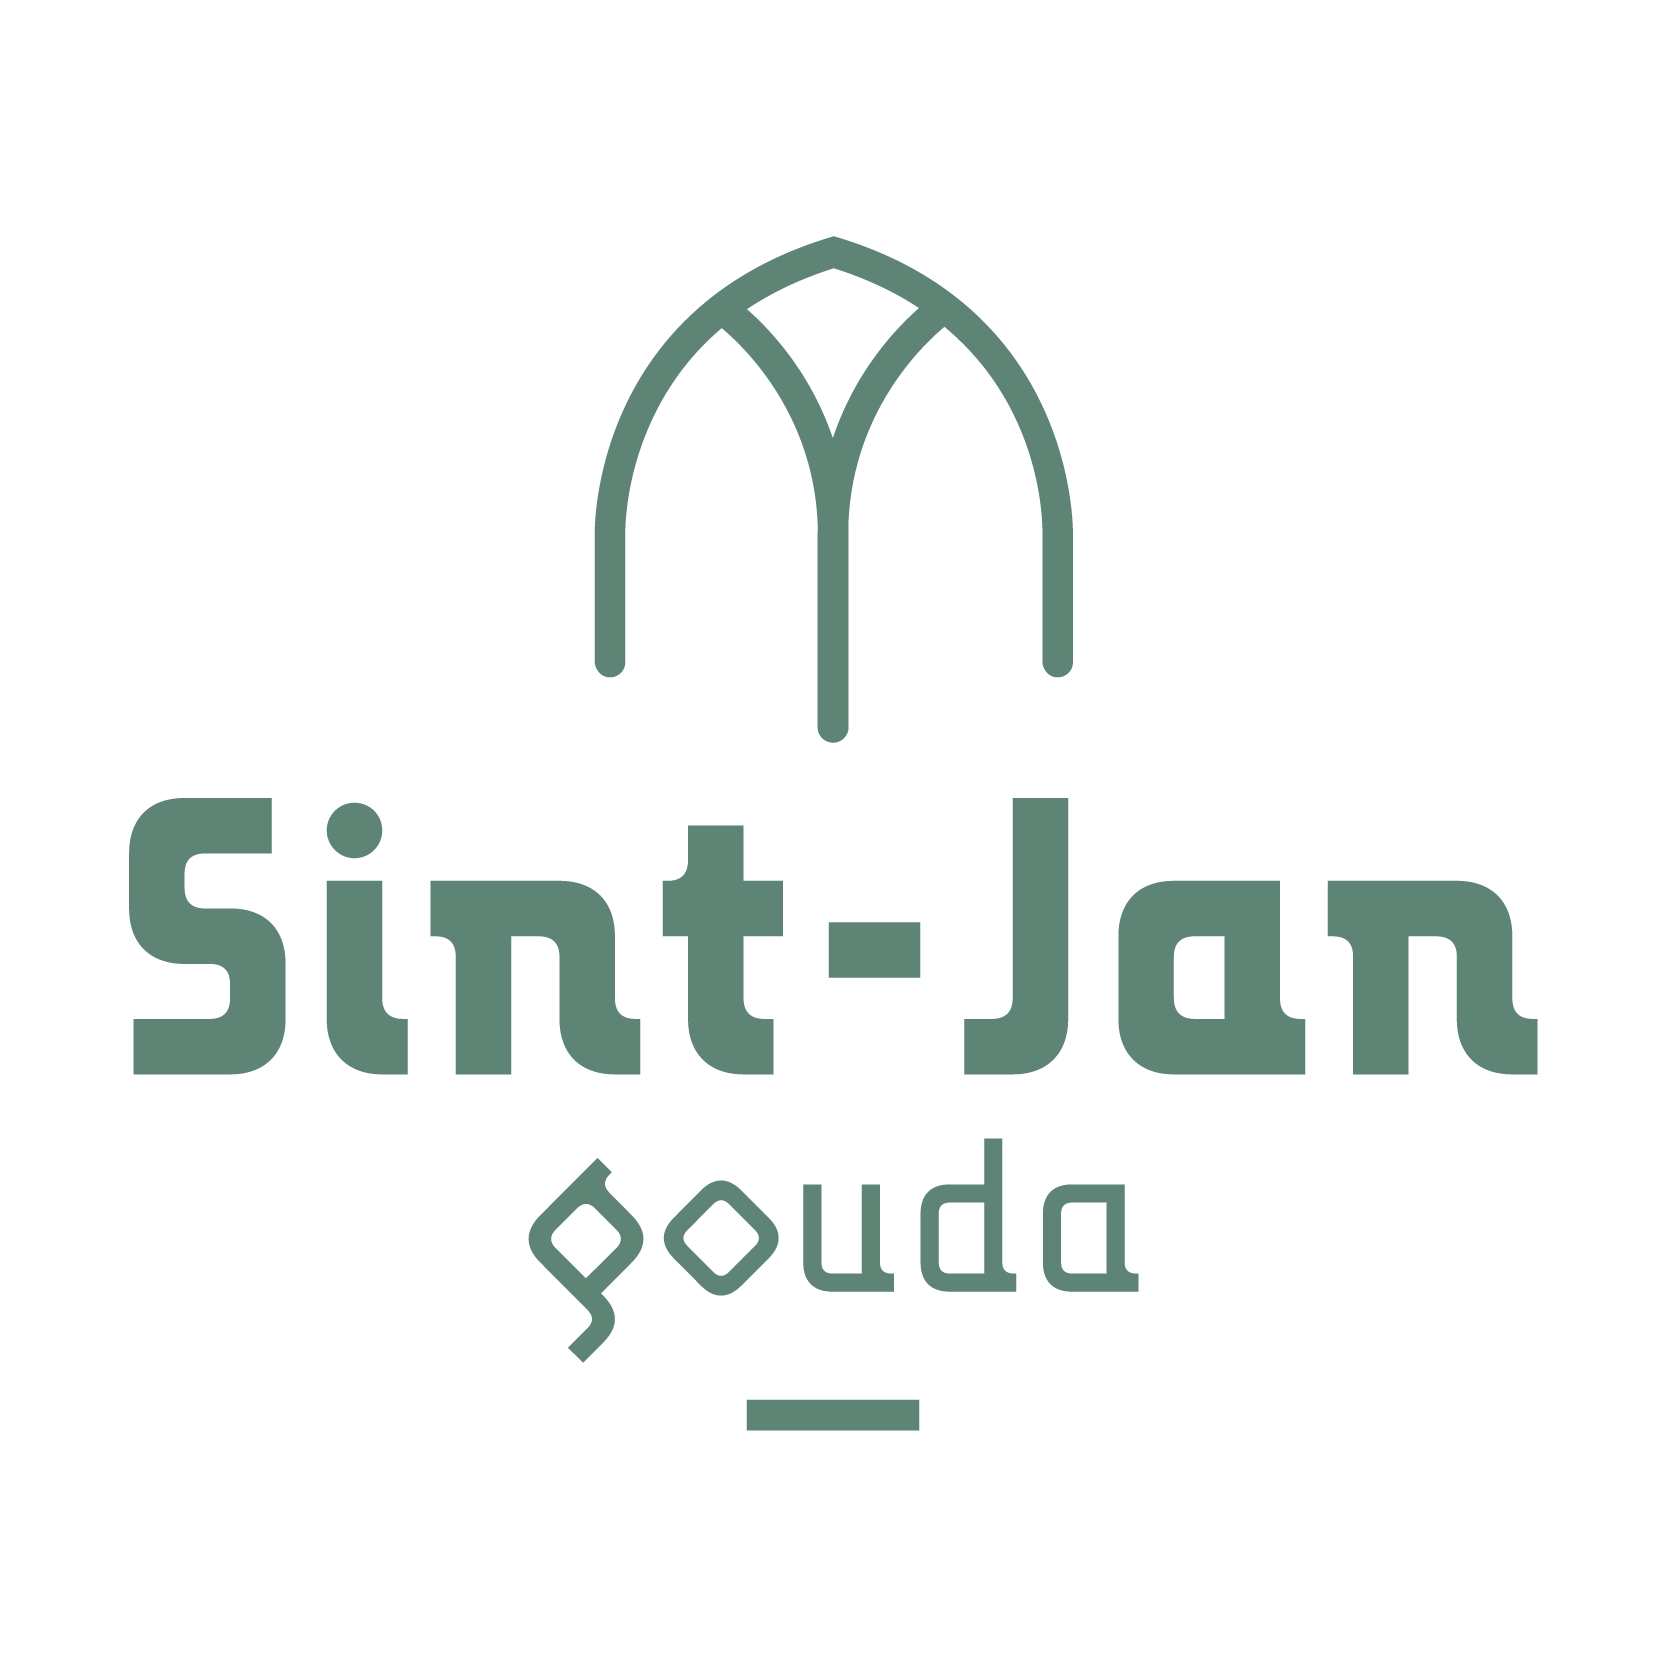 Sint-Janskerk Gouda